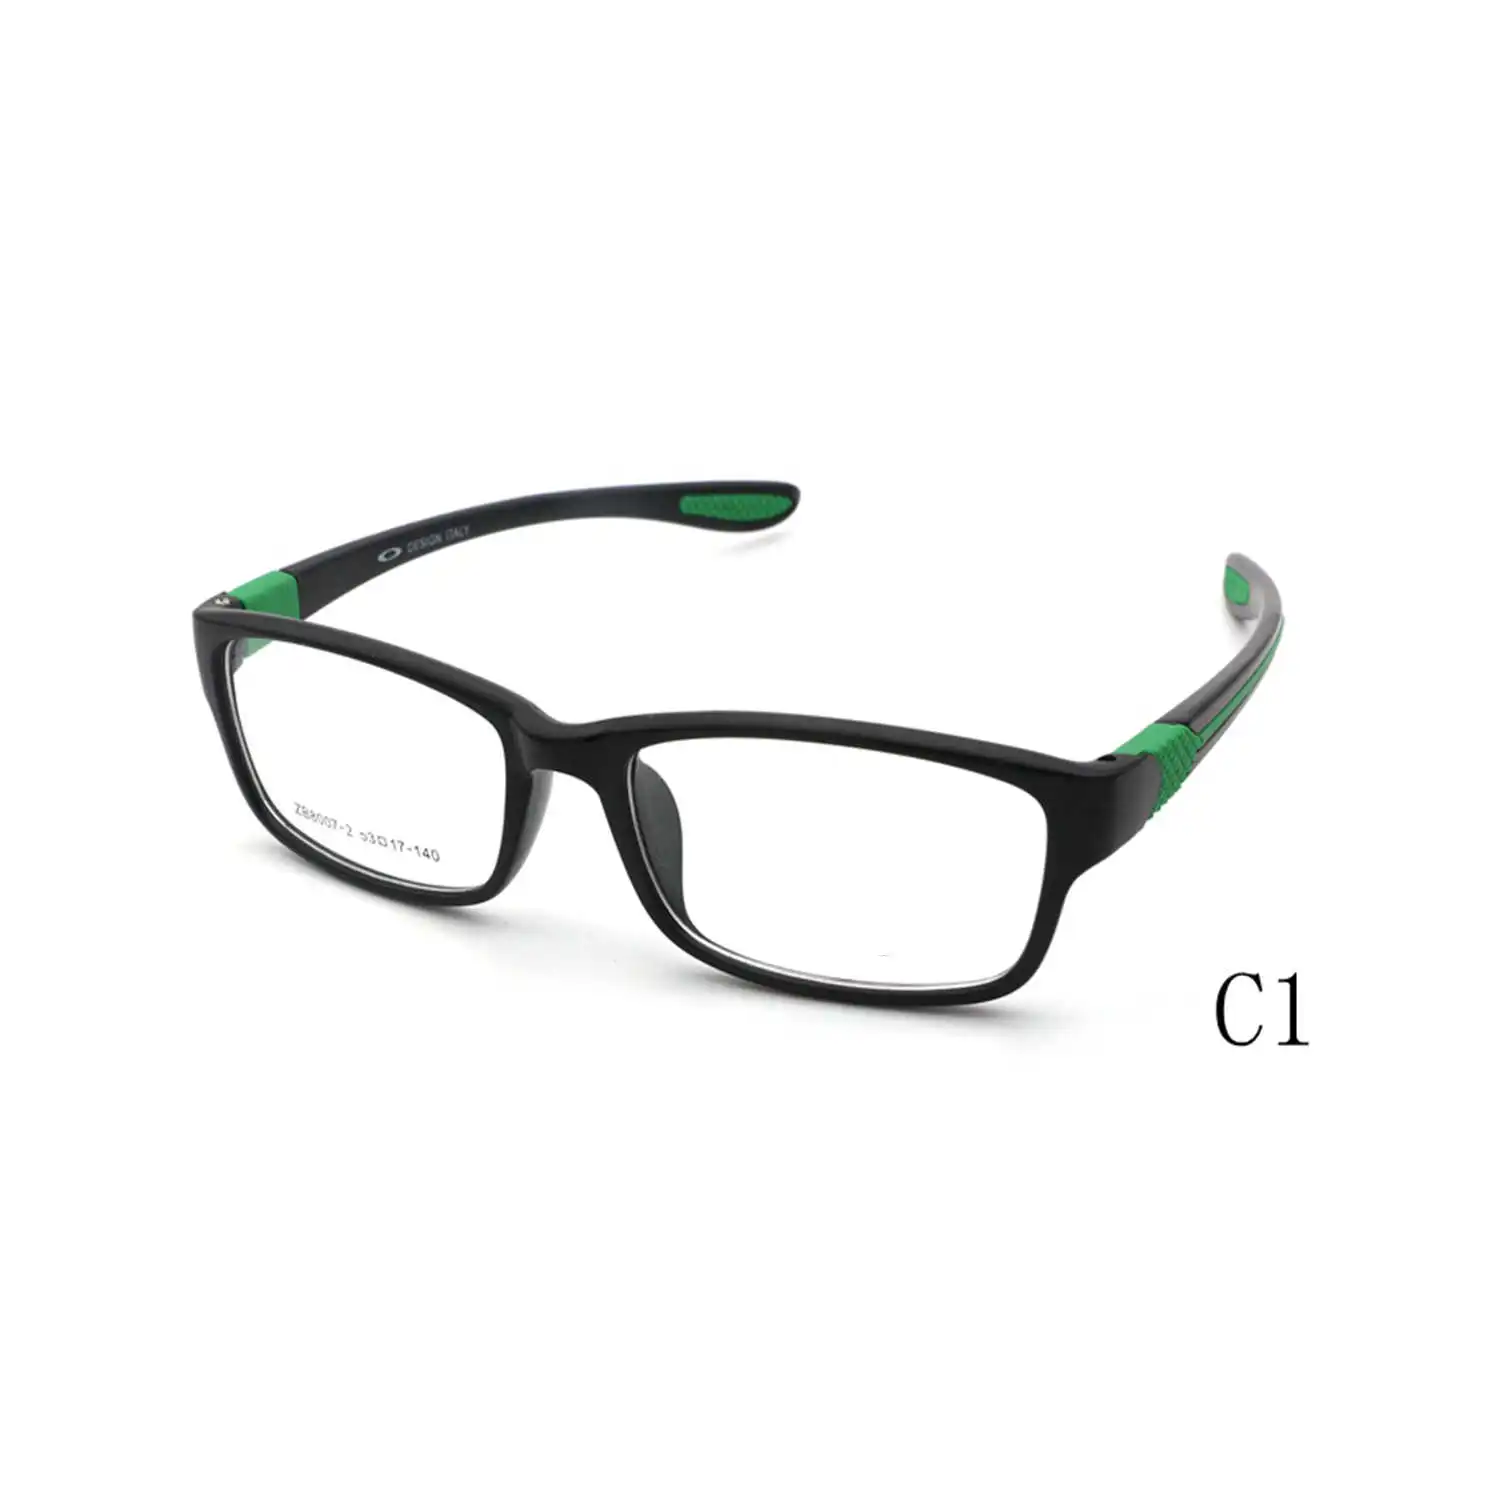 

OAK design CP opticalglasses frames cheap glasses Wholesales